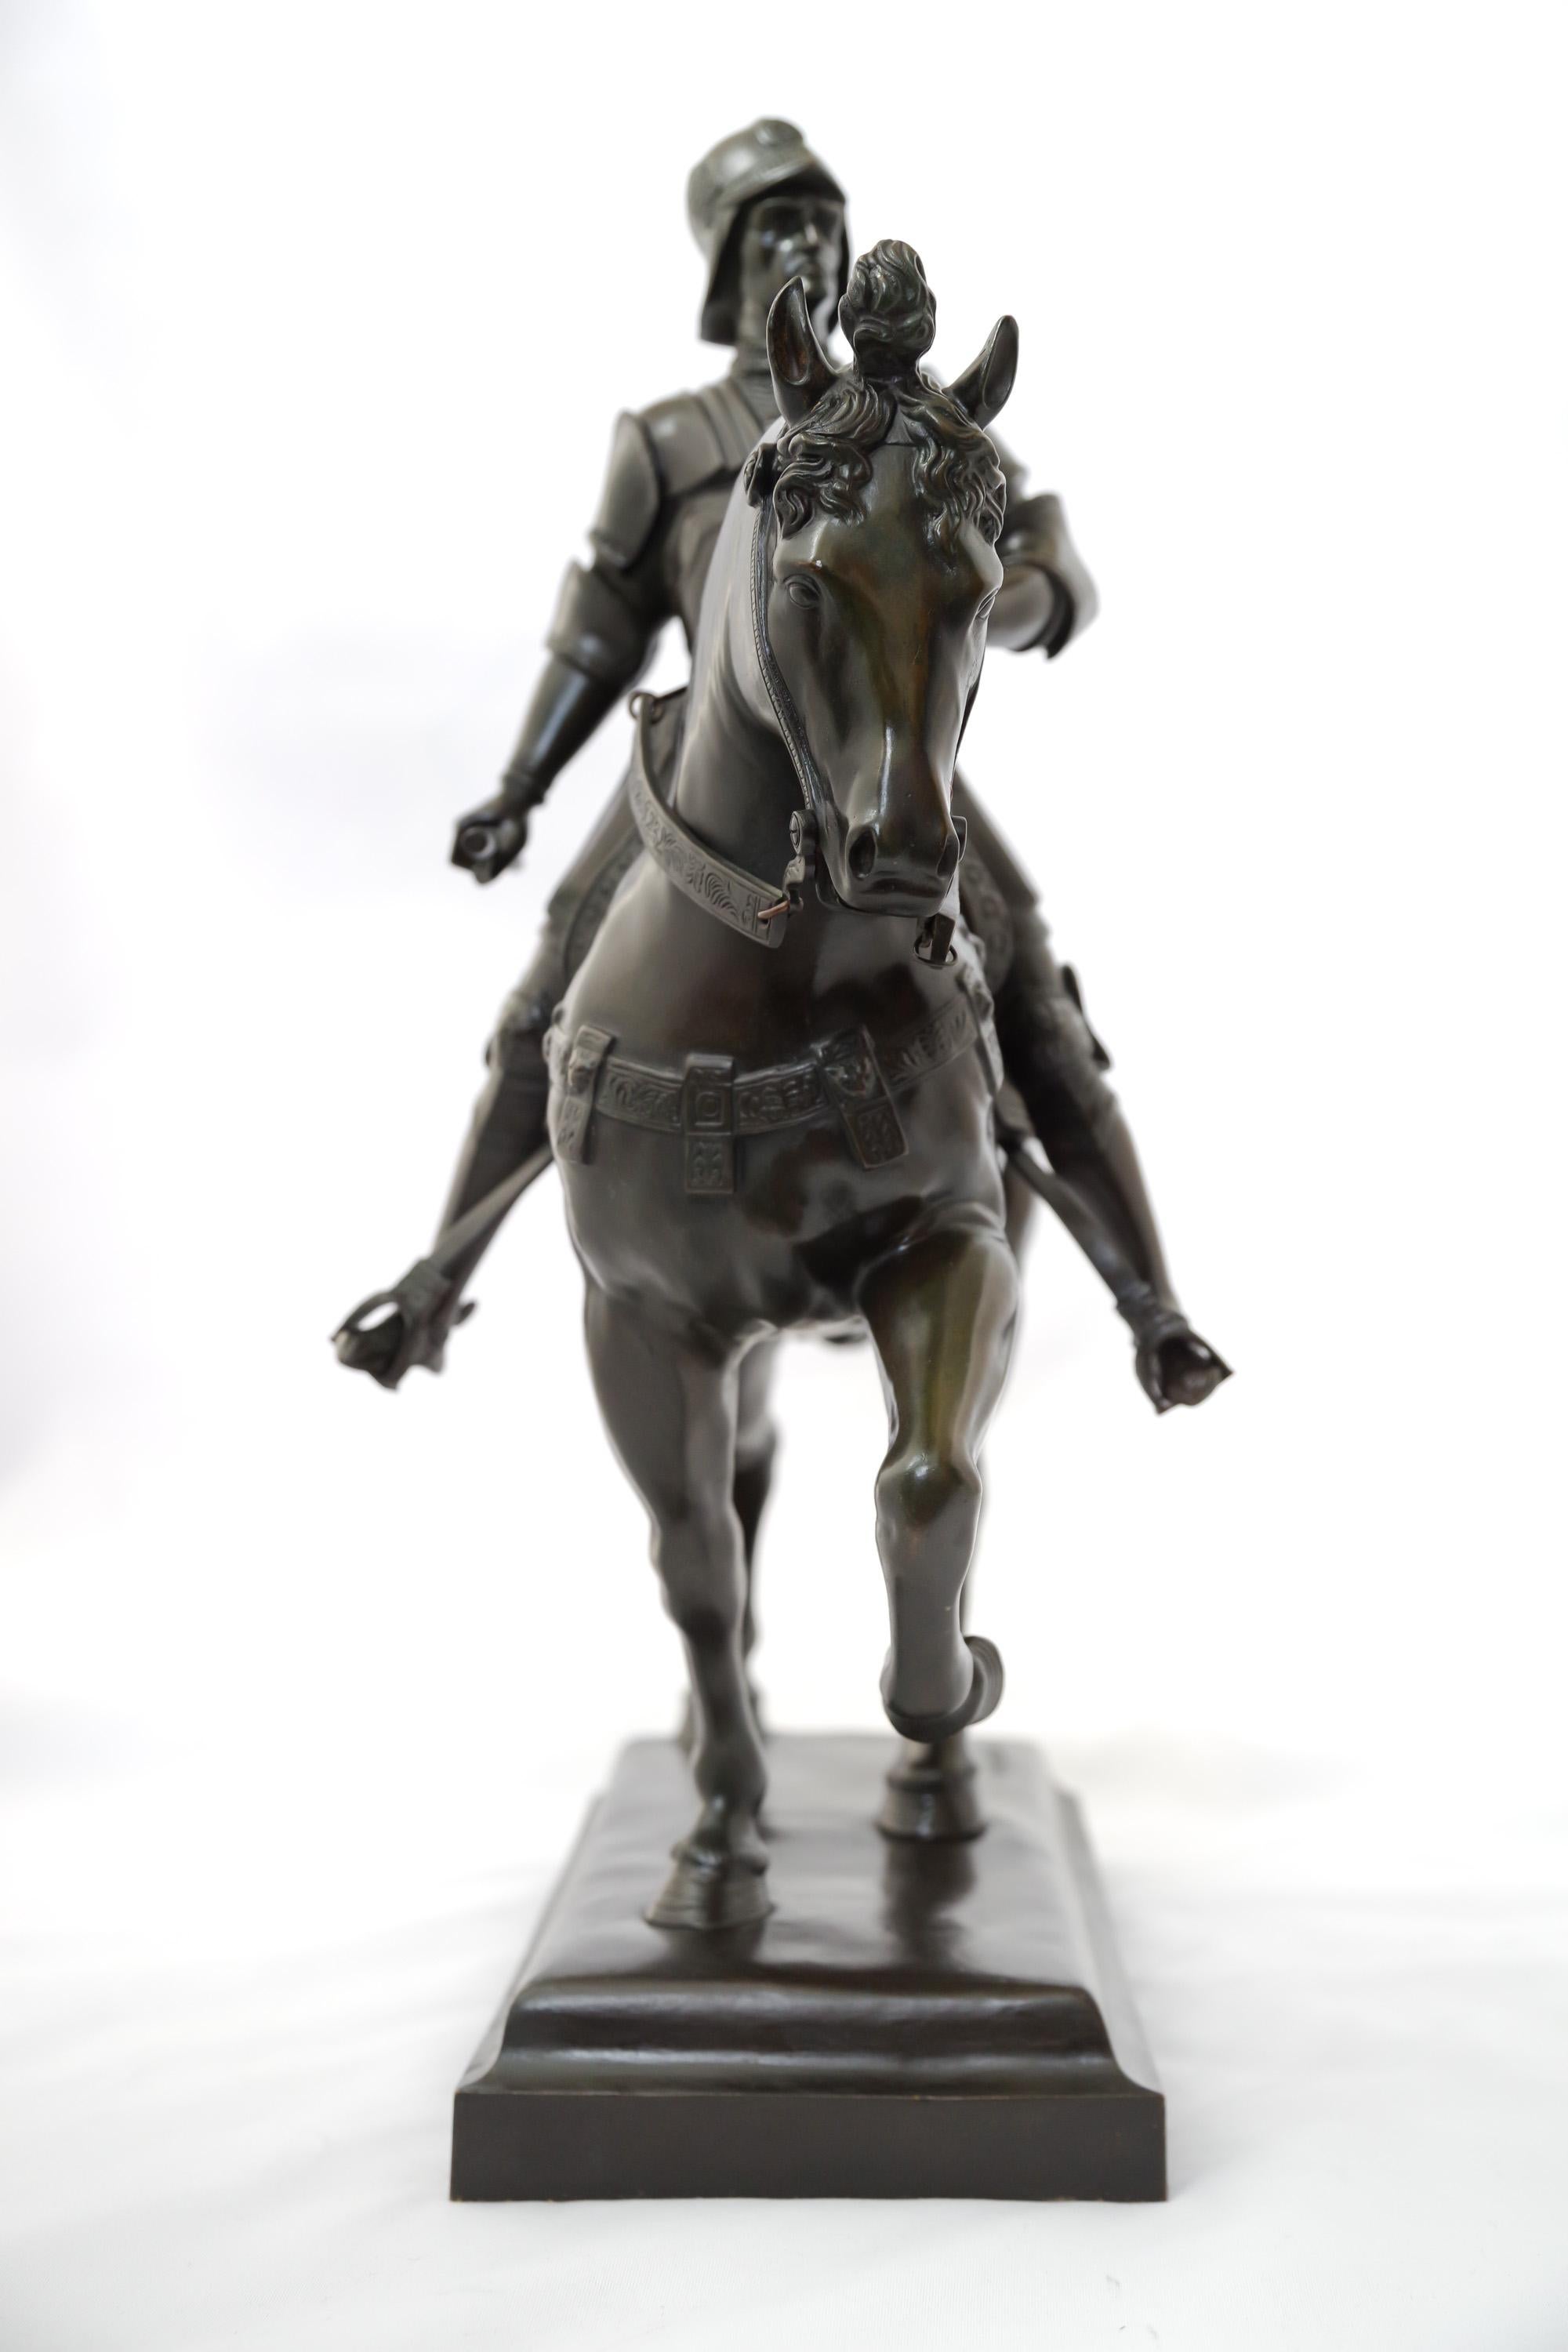 A 19th-century French noir-patinated bronze equestrian sculpture of Bartolomeo Colleoni after the original by Andrea del Verrocchio, teacher of Leonardo da Vinci, made in Venice between 1480 and 1488. Colleoni (1395/1400-1475) was an enterprising